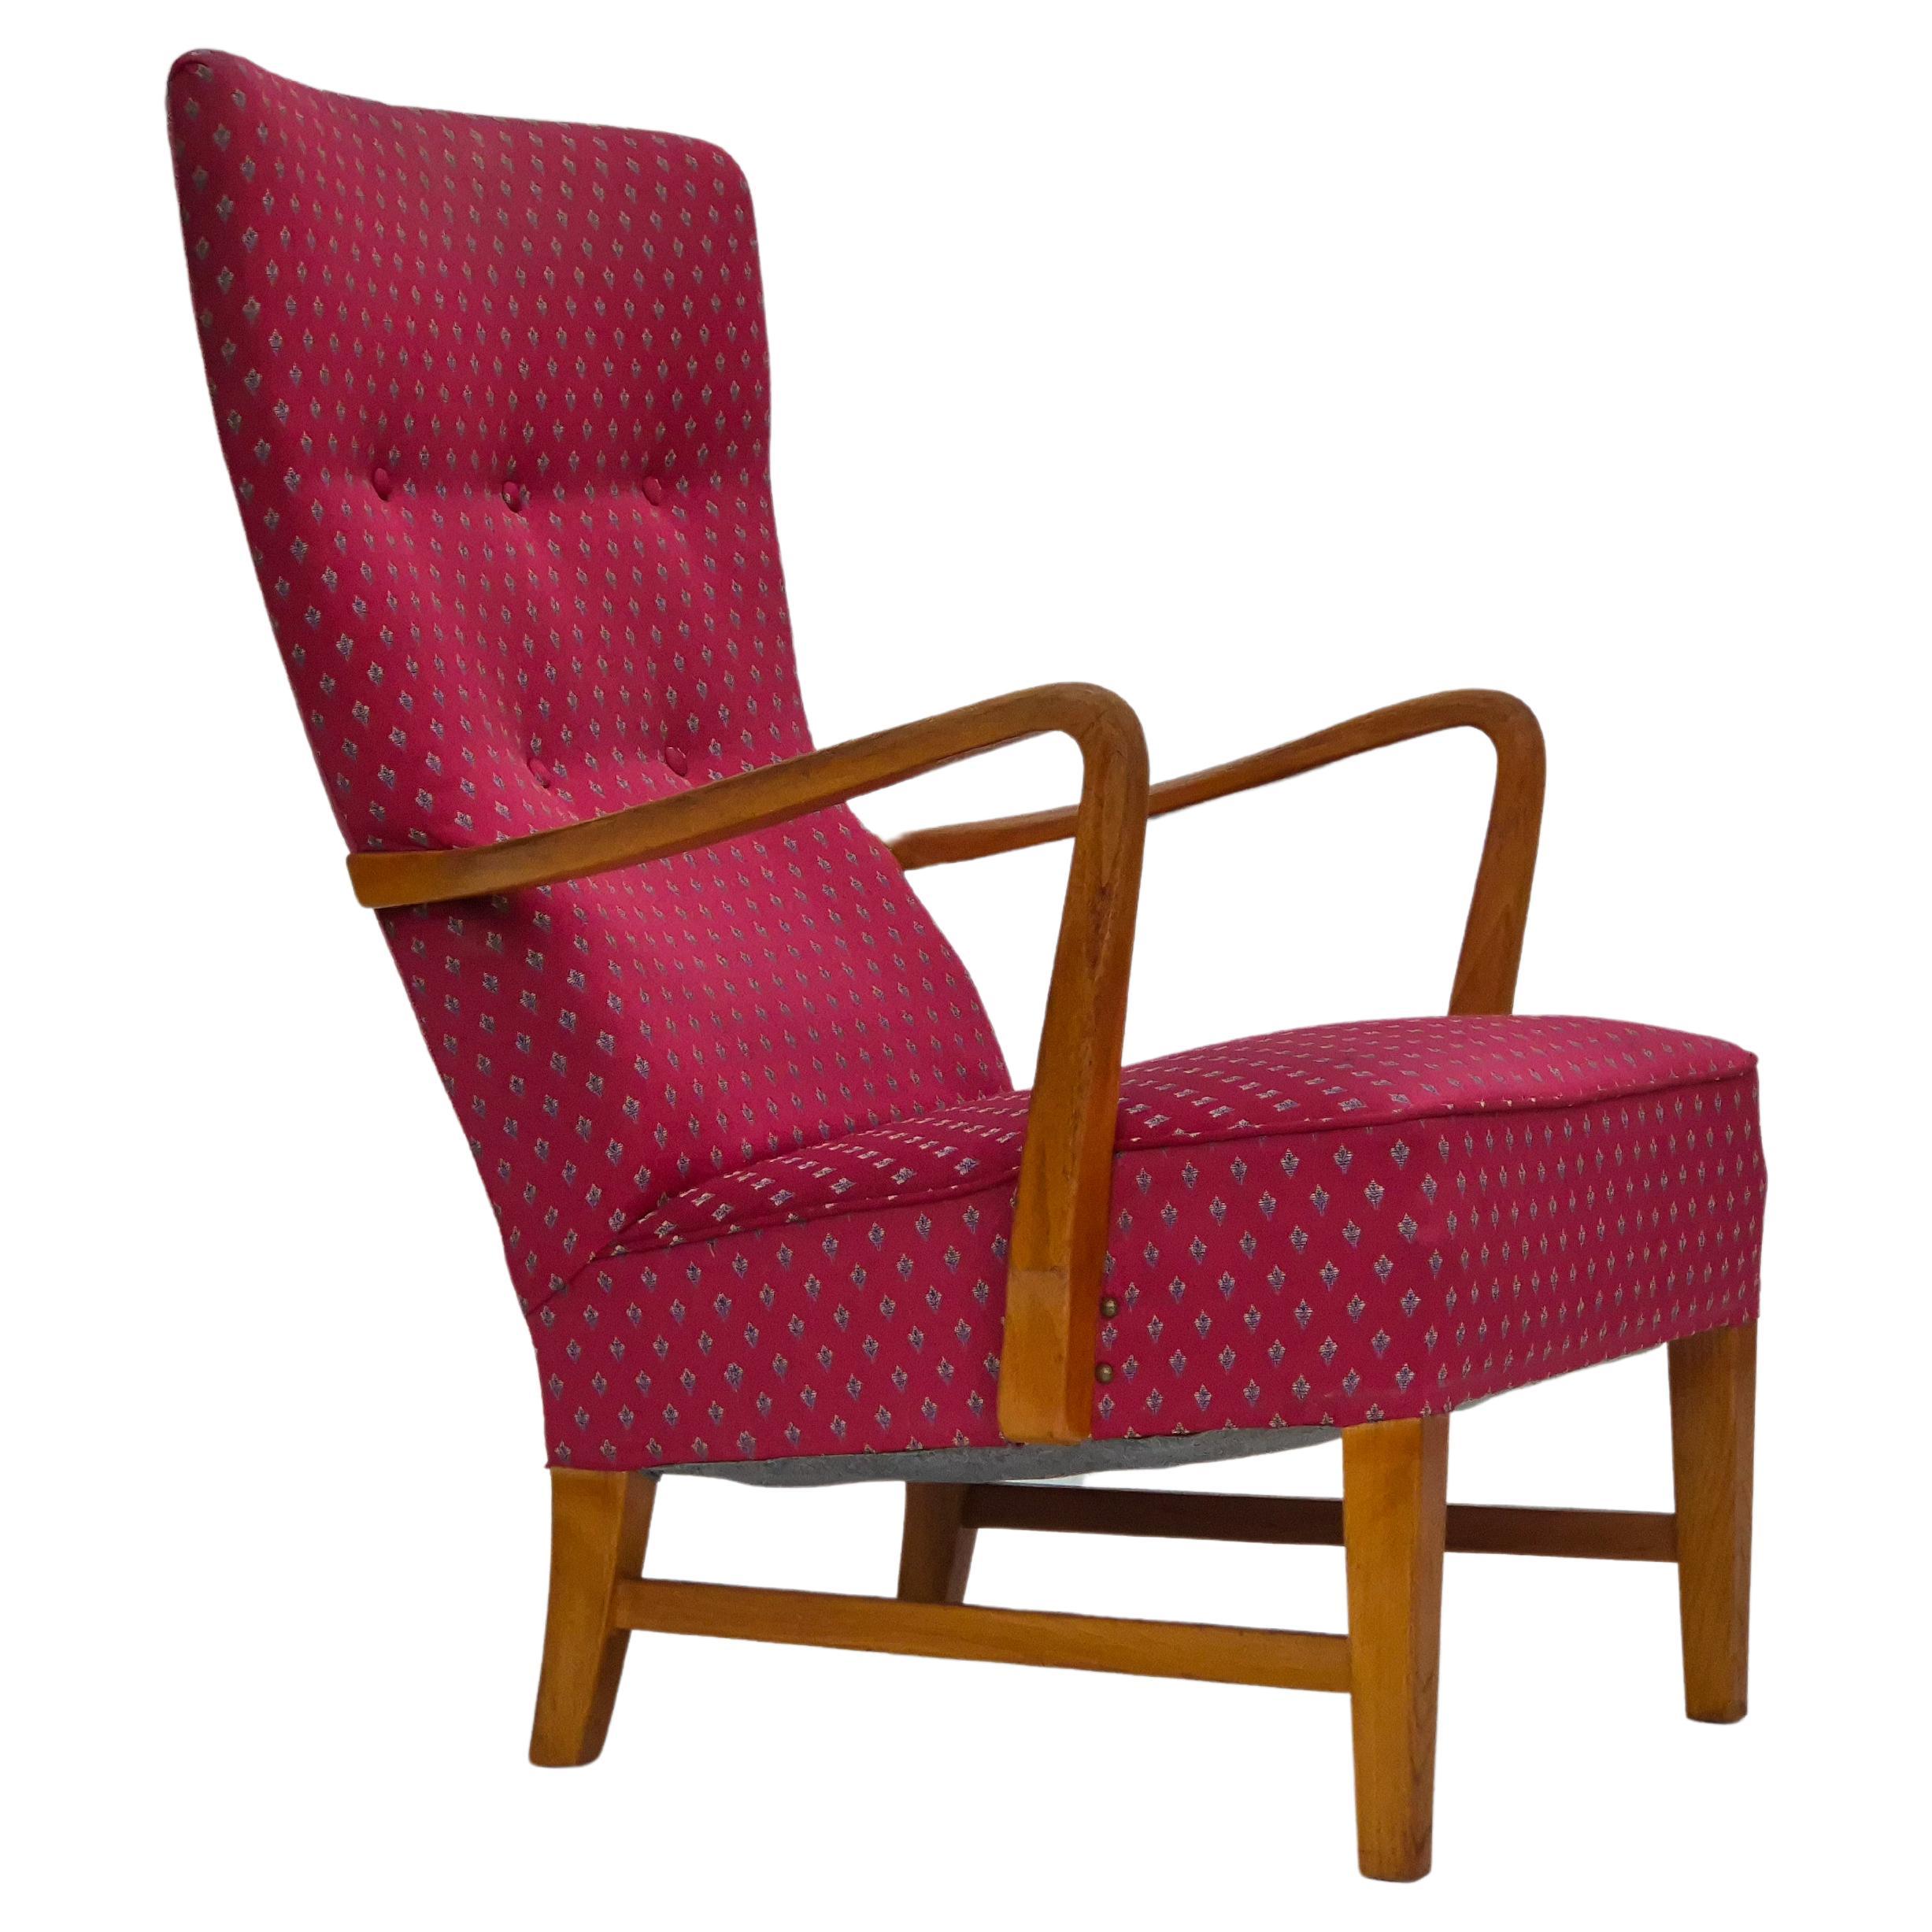 1970s, Scandinavian chair, original very good condition, ash wood. For Sale